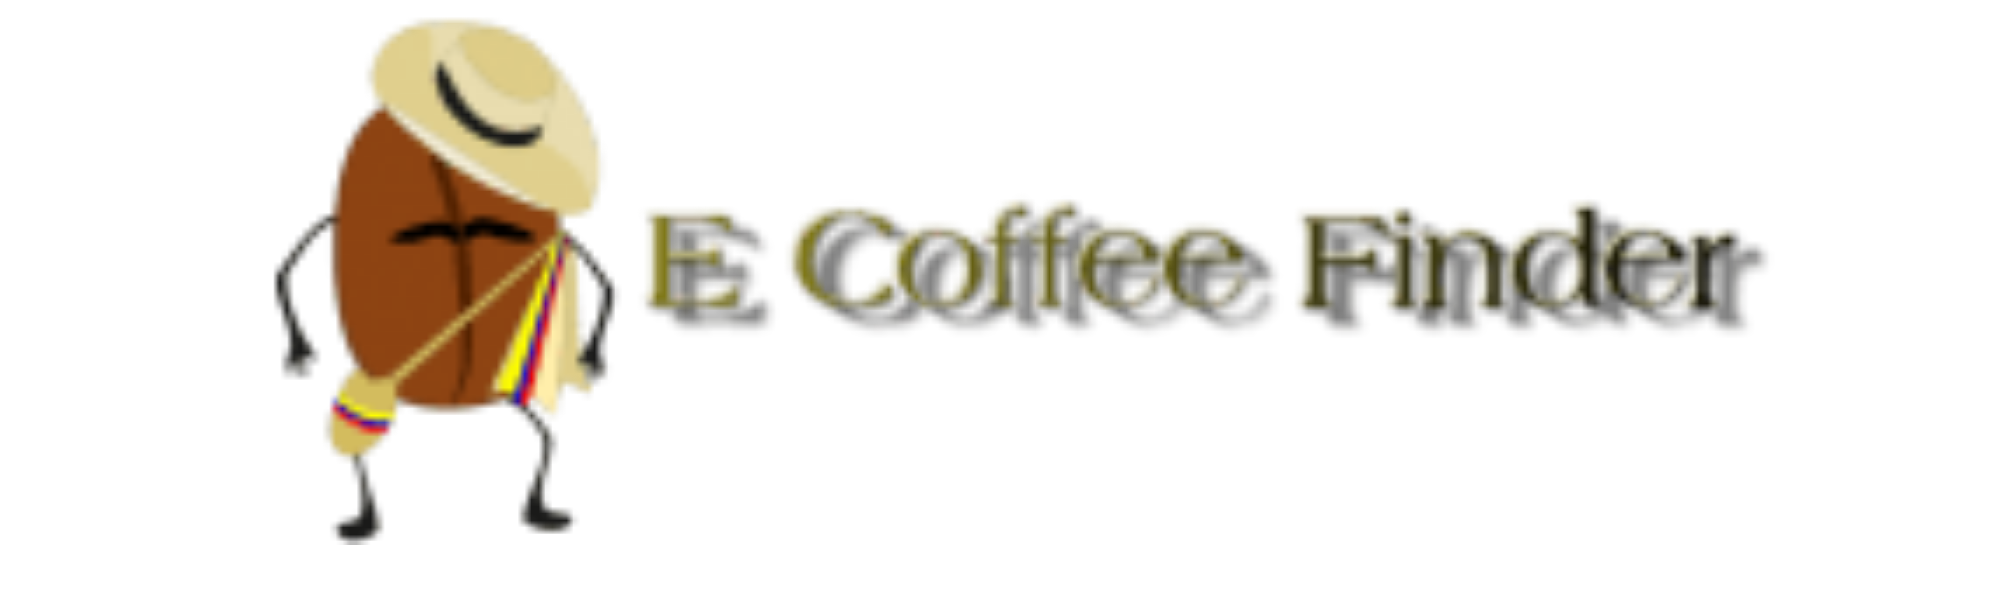 E Coffee Finder Logo Mark jpg